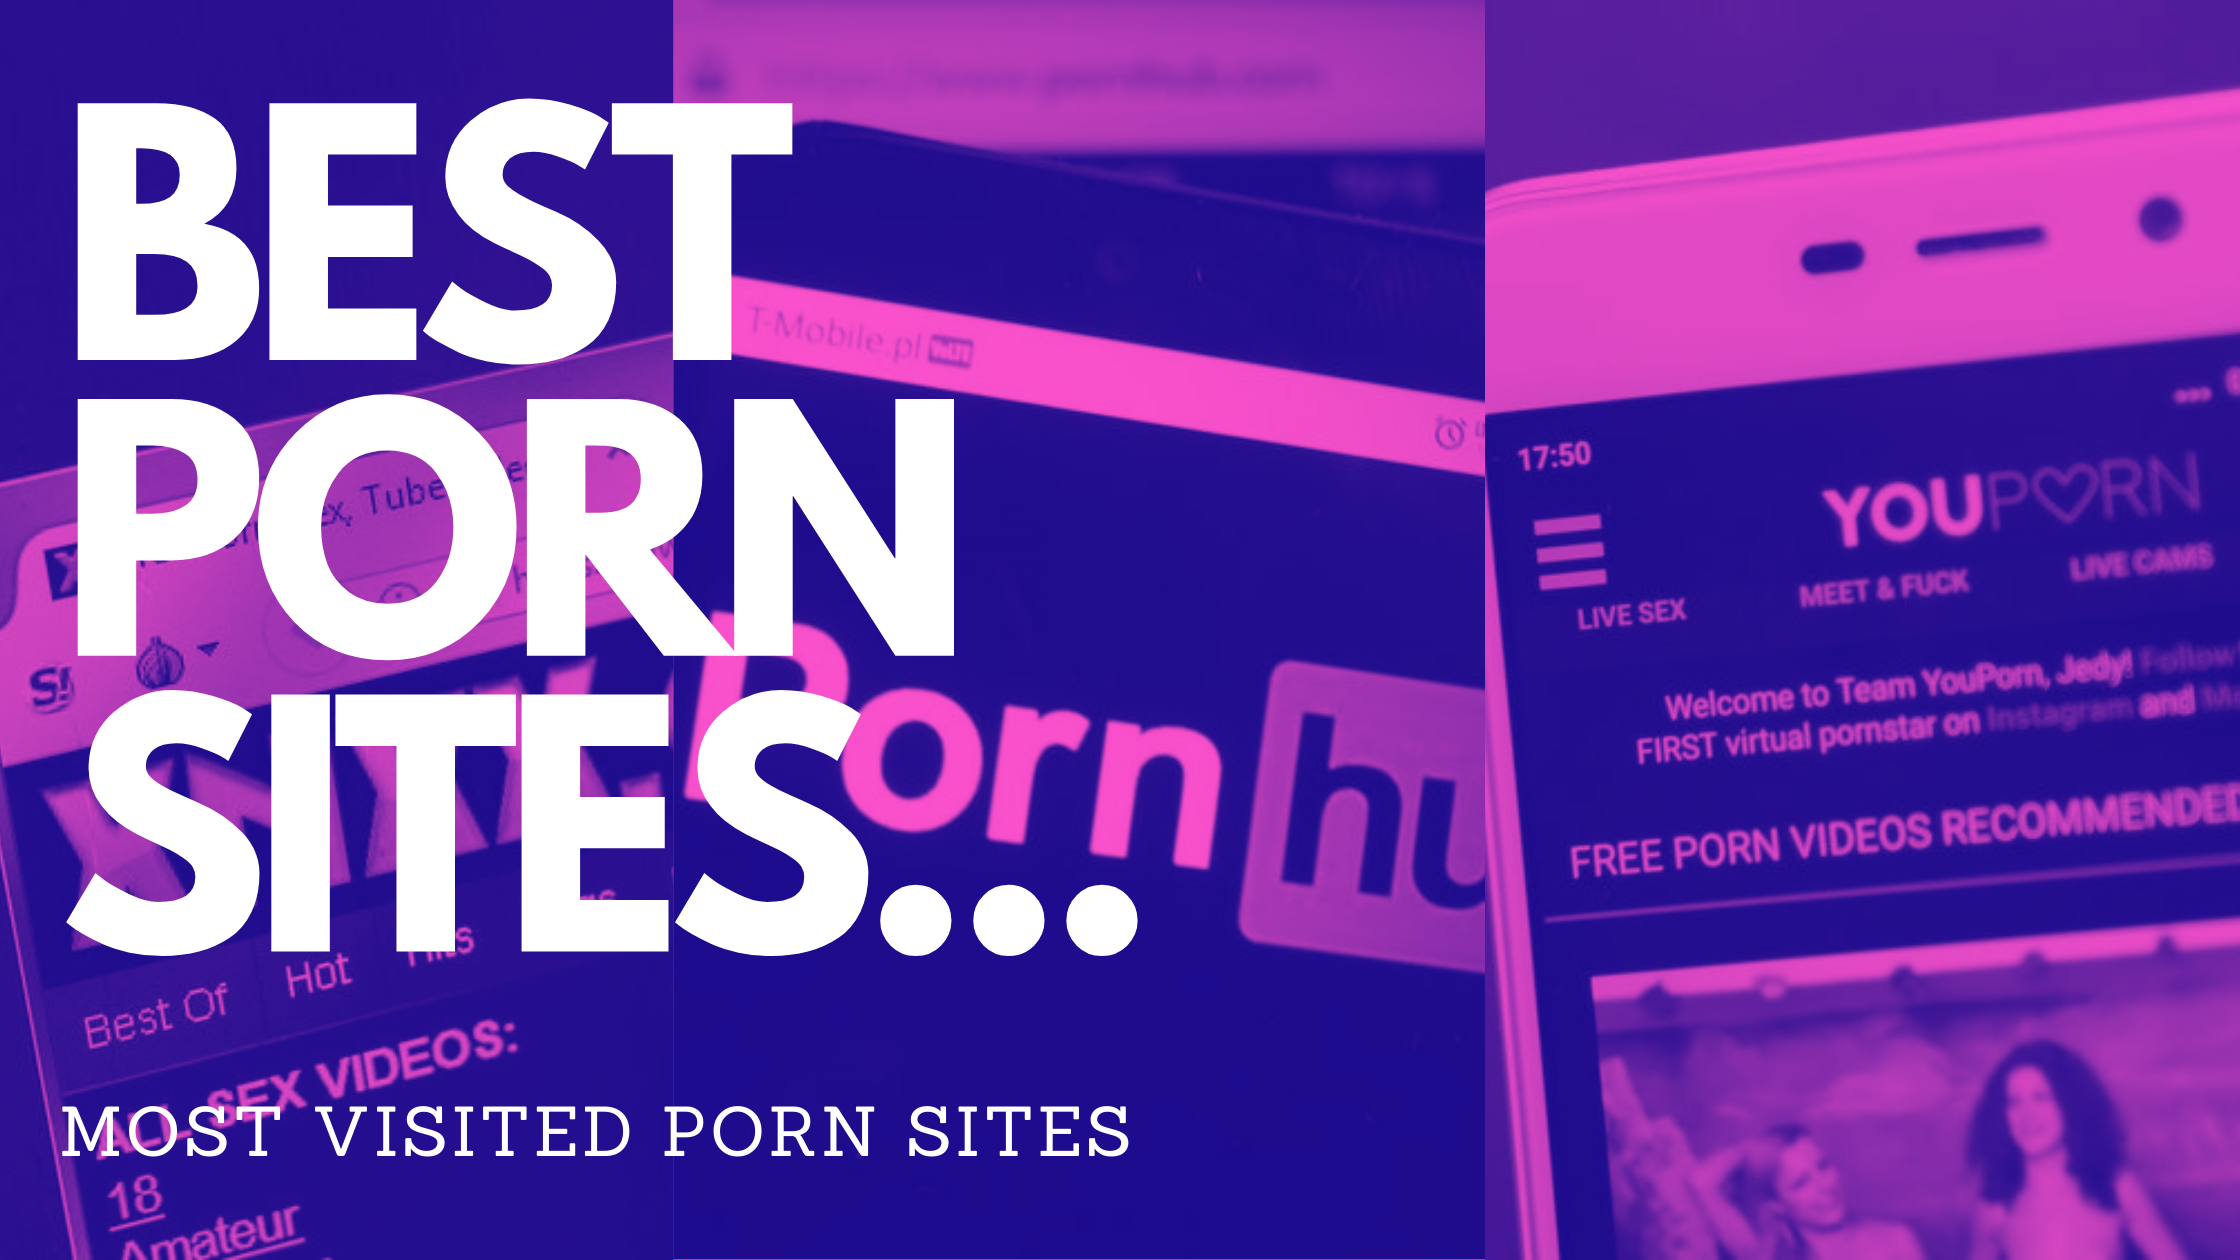 Porn Tube Sites - 10 Most Popular Tube Site Pornstars - PornStar Rankings.com